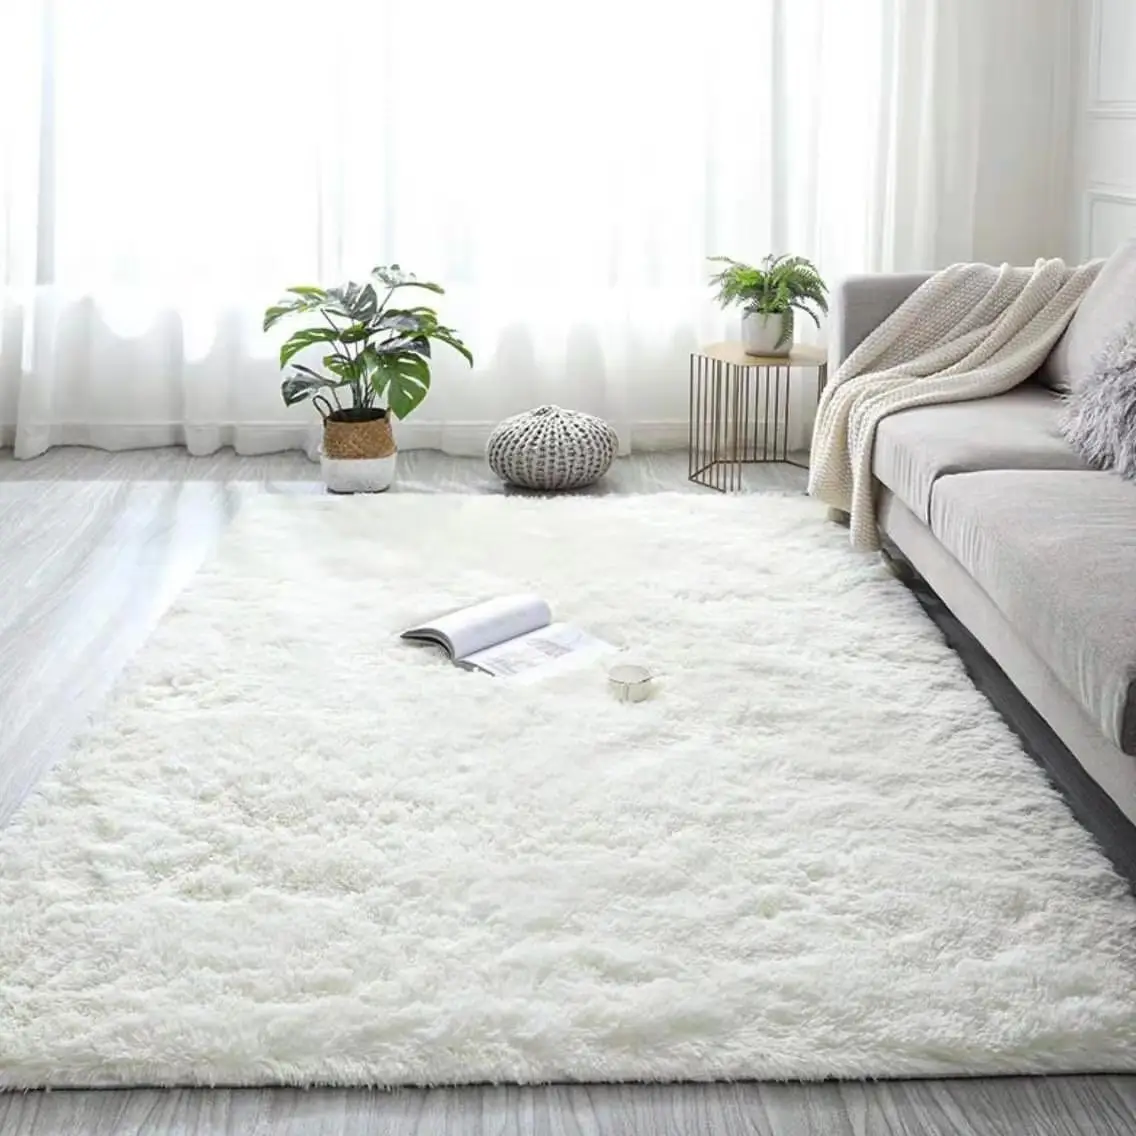 Soft Fluffy Area Rugs for Bedroom Kids Room Living Room Carpet Shag Furry Fur Rug for Boys Girls Dorm Room